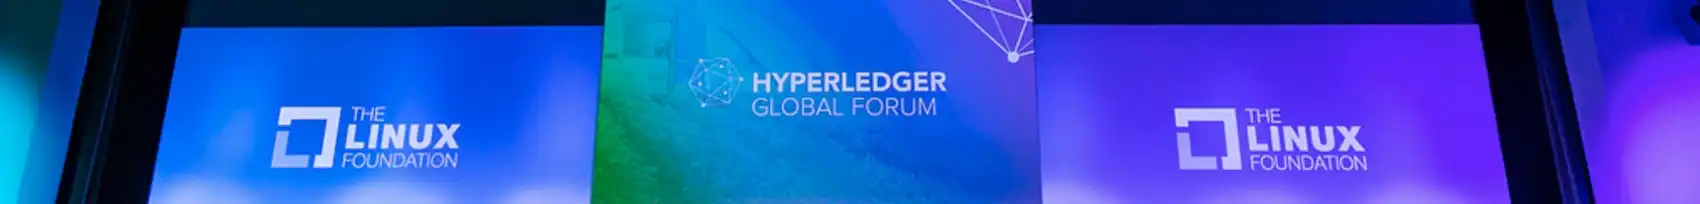 Hyperledger Global Forum-2018